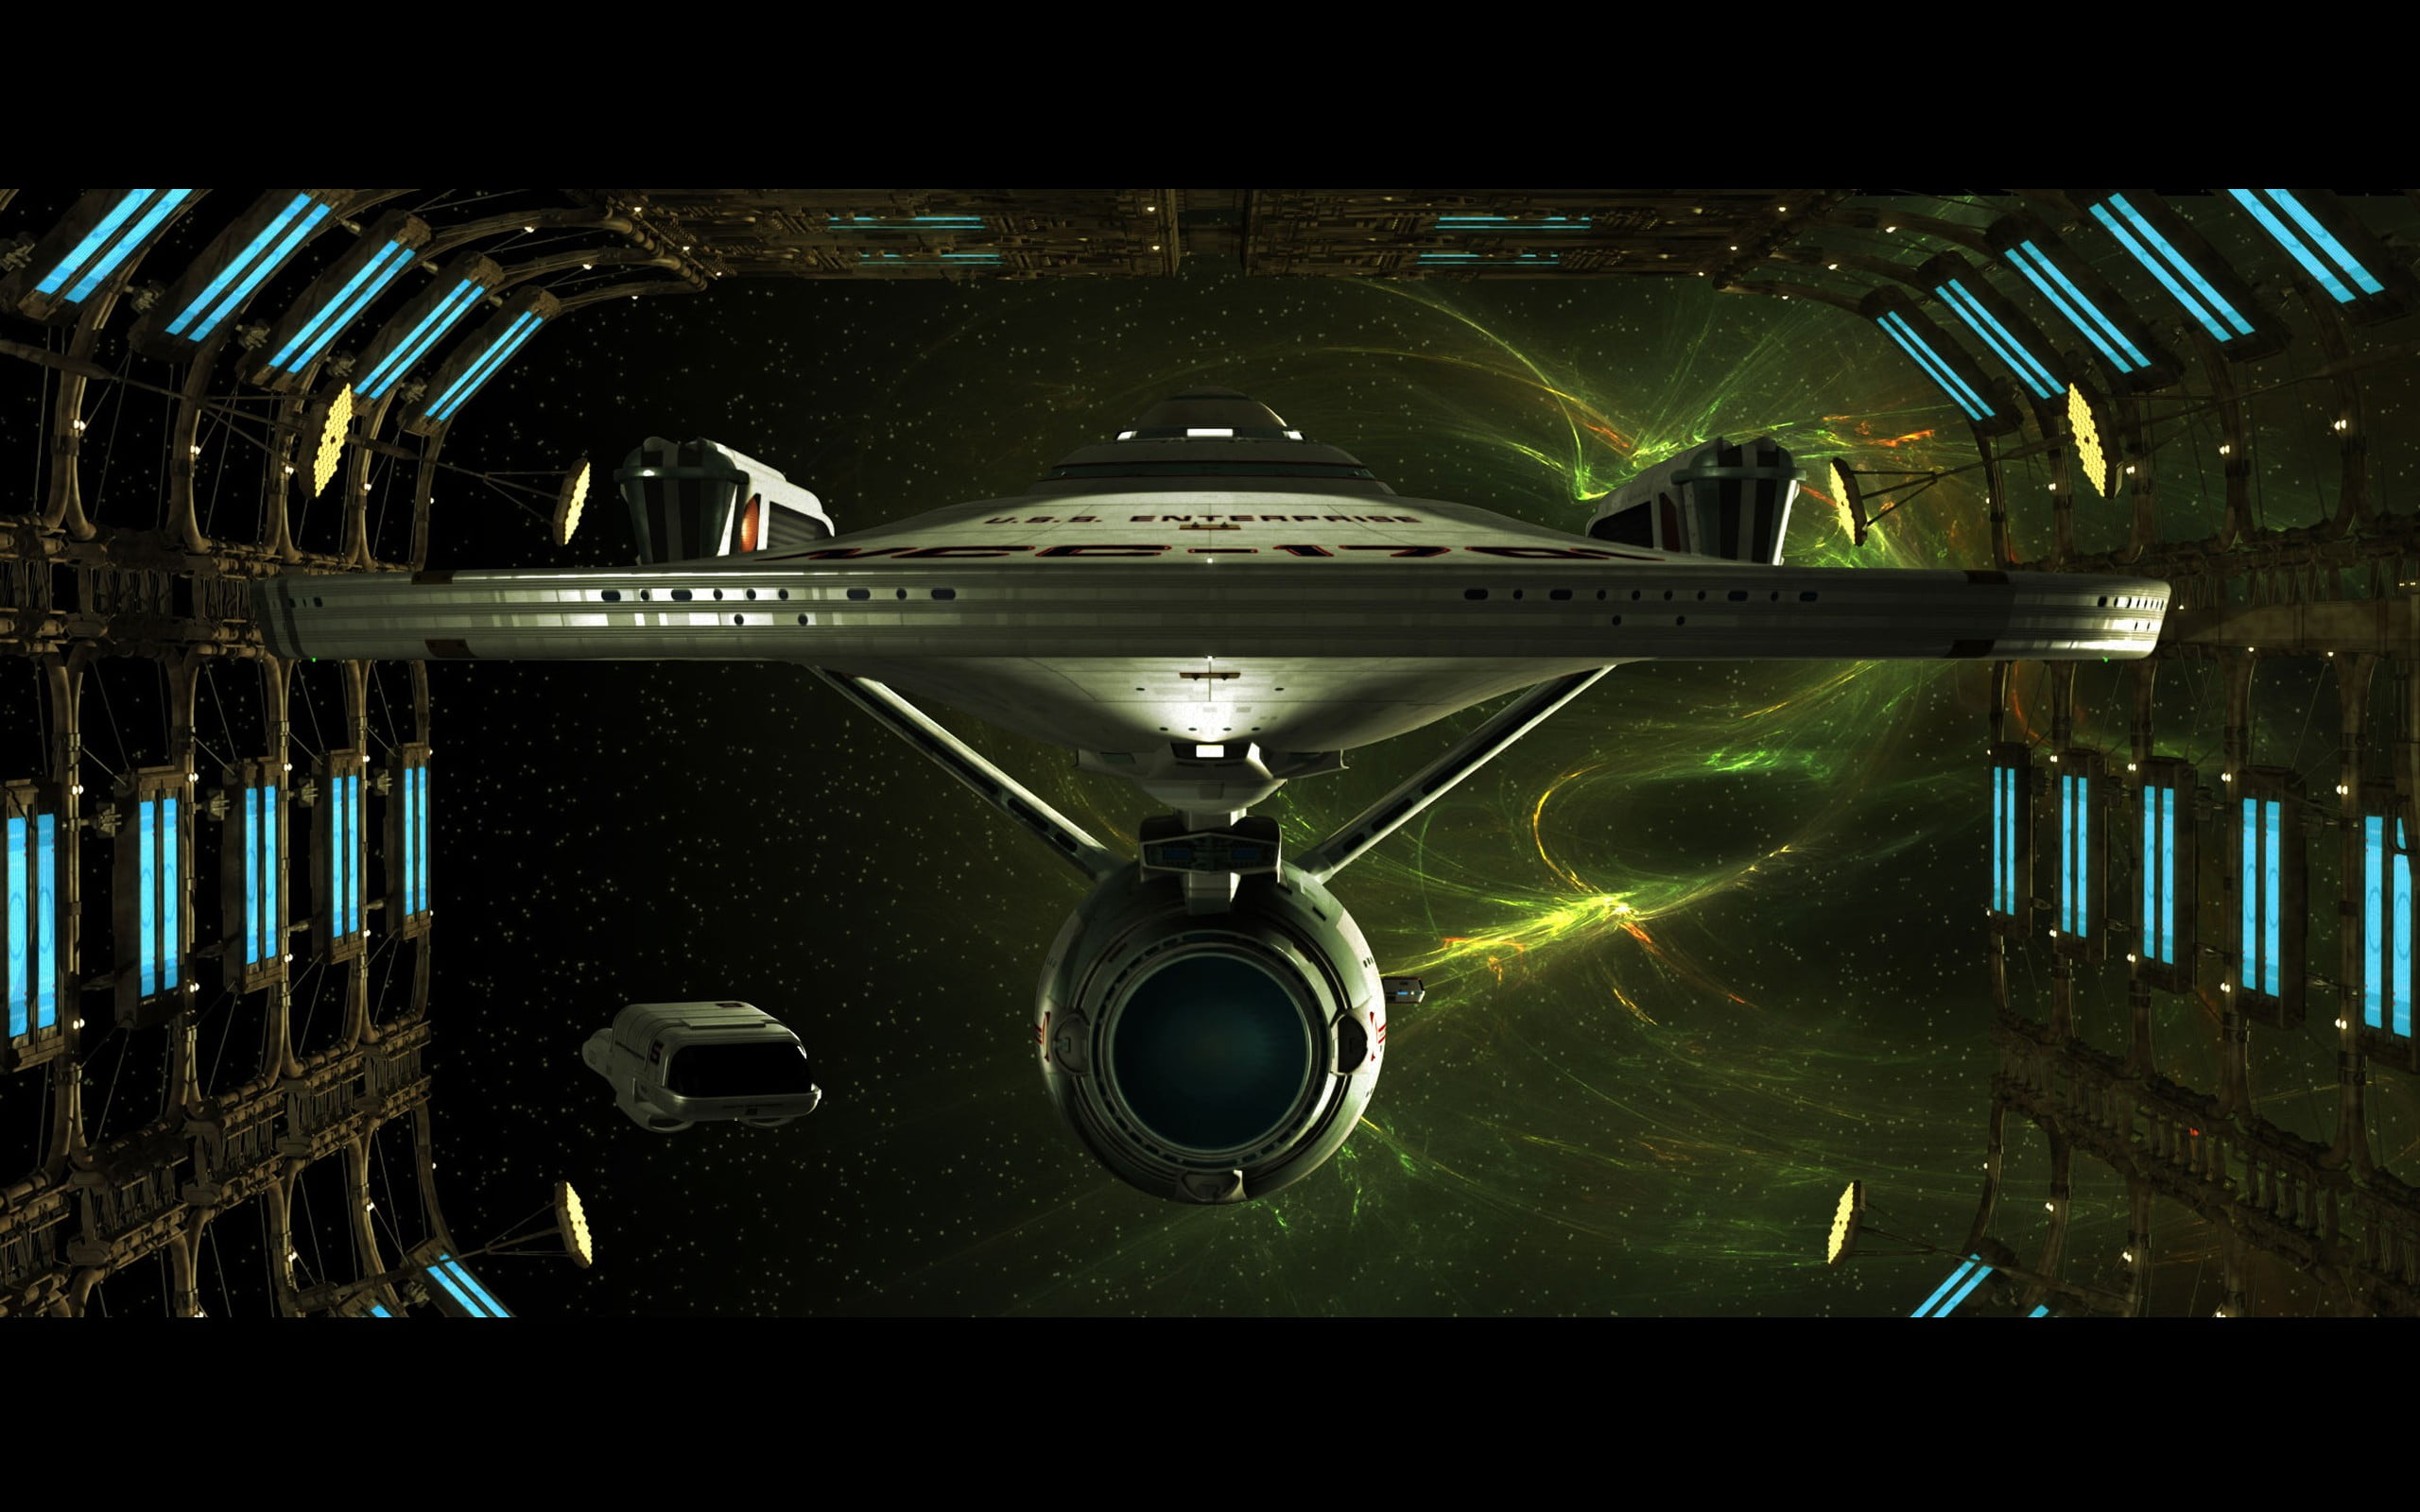 Star Trek USS Enterprise, Star Trek, USS Enterprise (spaceship), spaceship